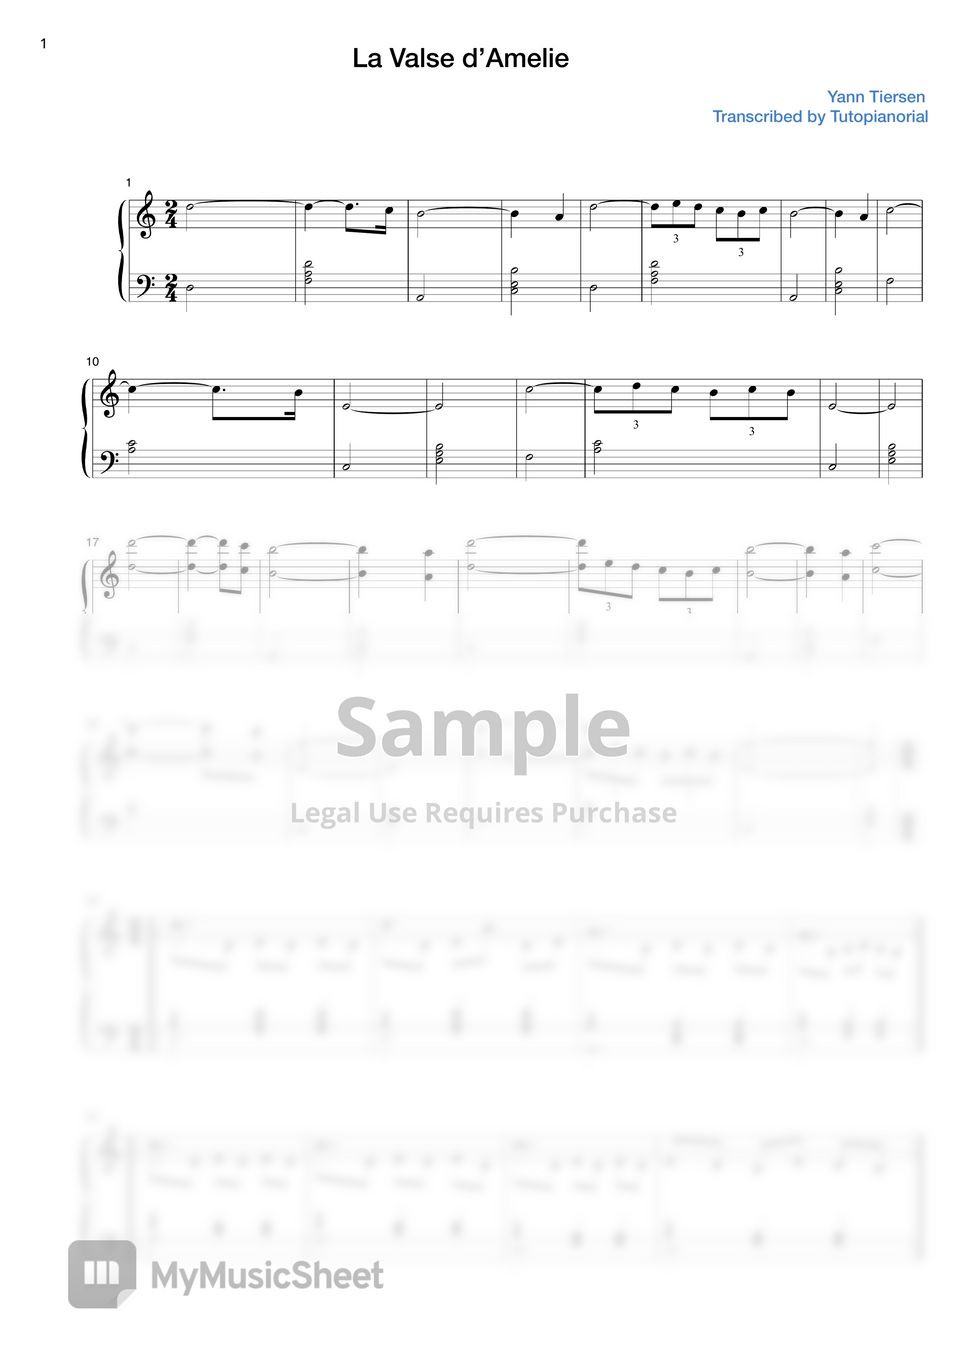 Yann Tiersen - Amelie Medley (3 pieces) by Tutopianorial